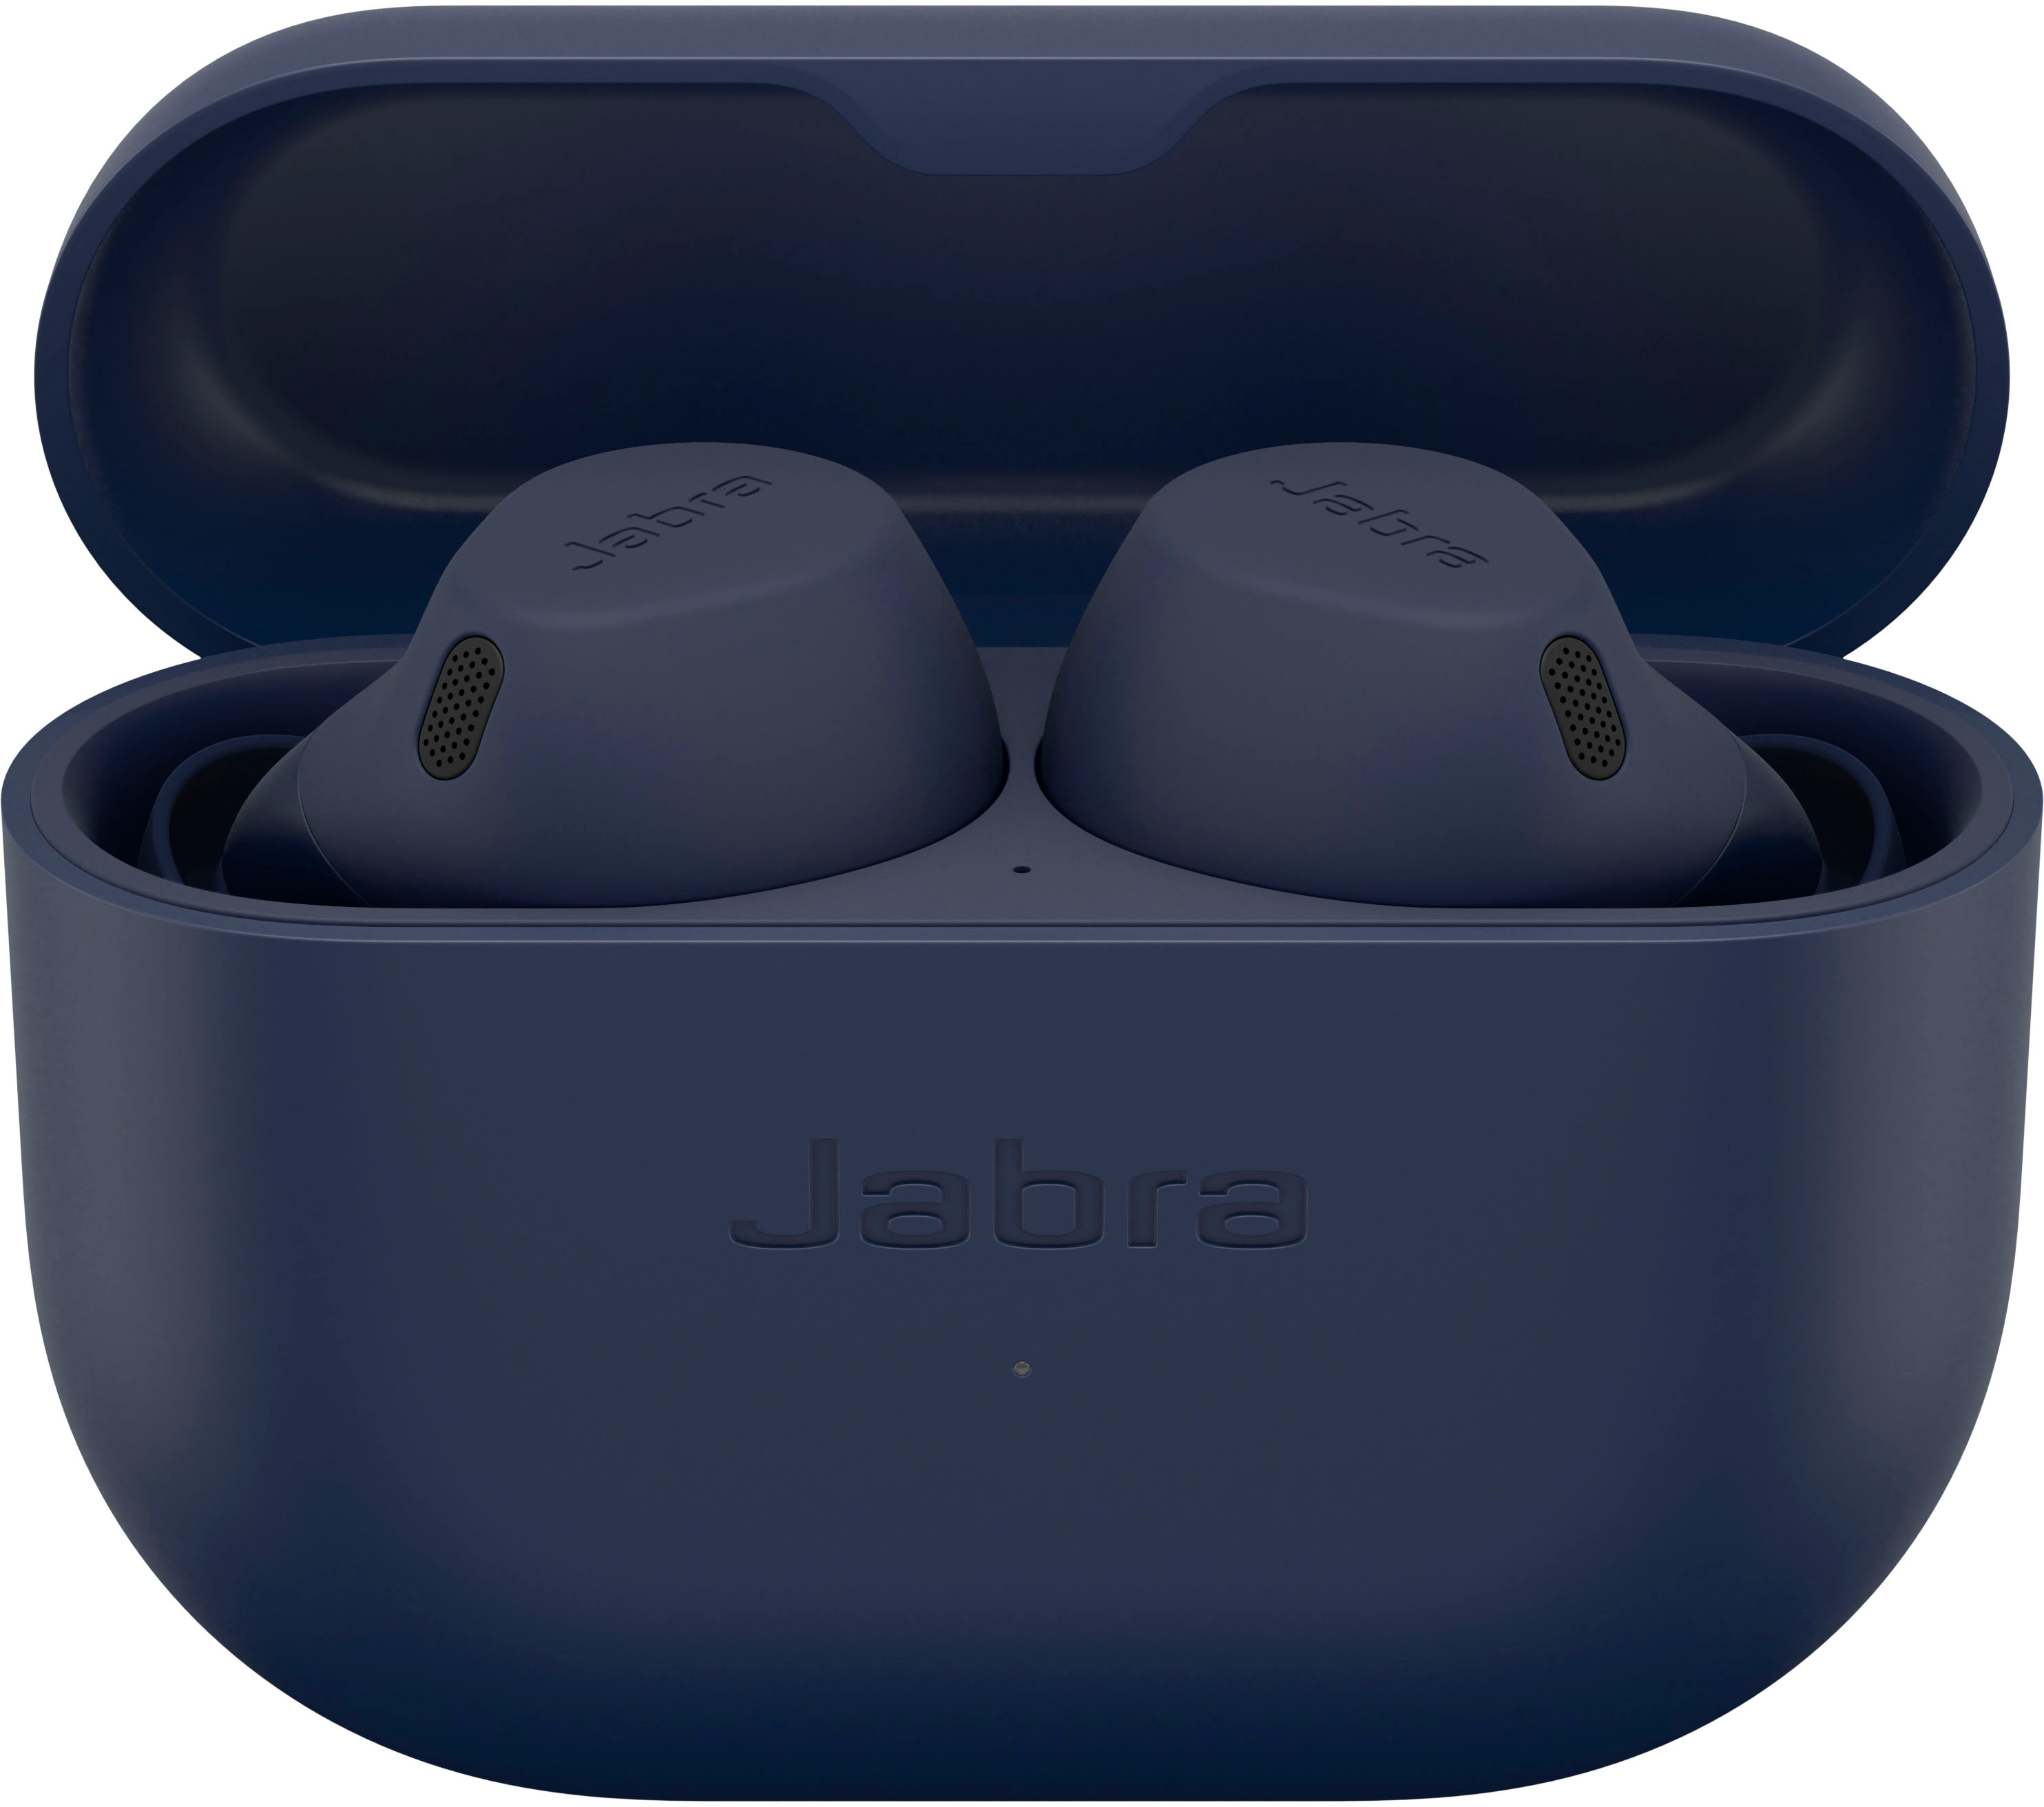 Jabra Elite 8 Active - Best and Most Advanced Sports Wireless